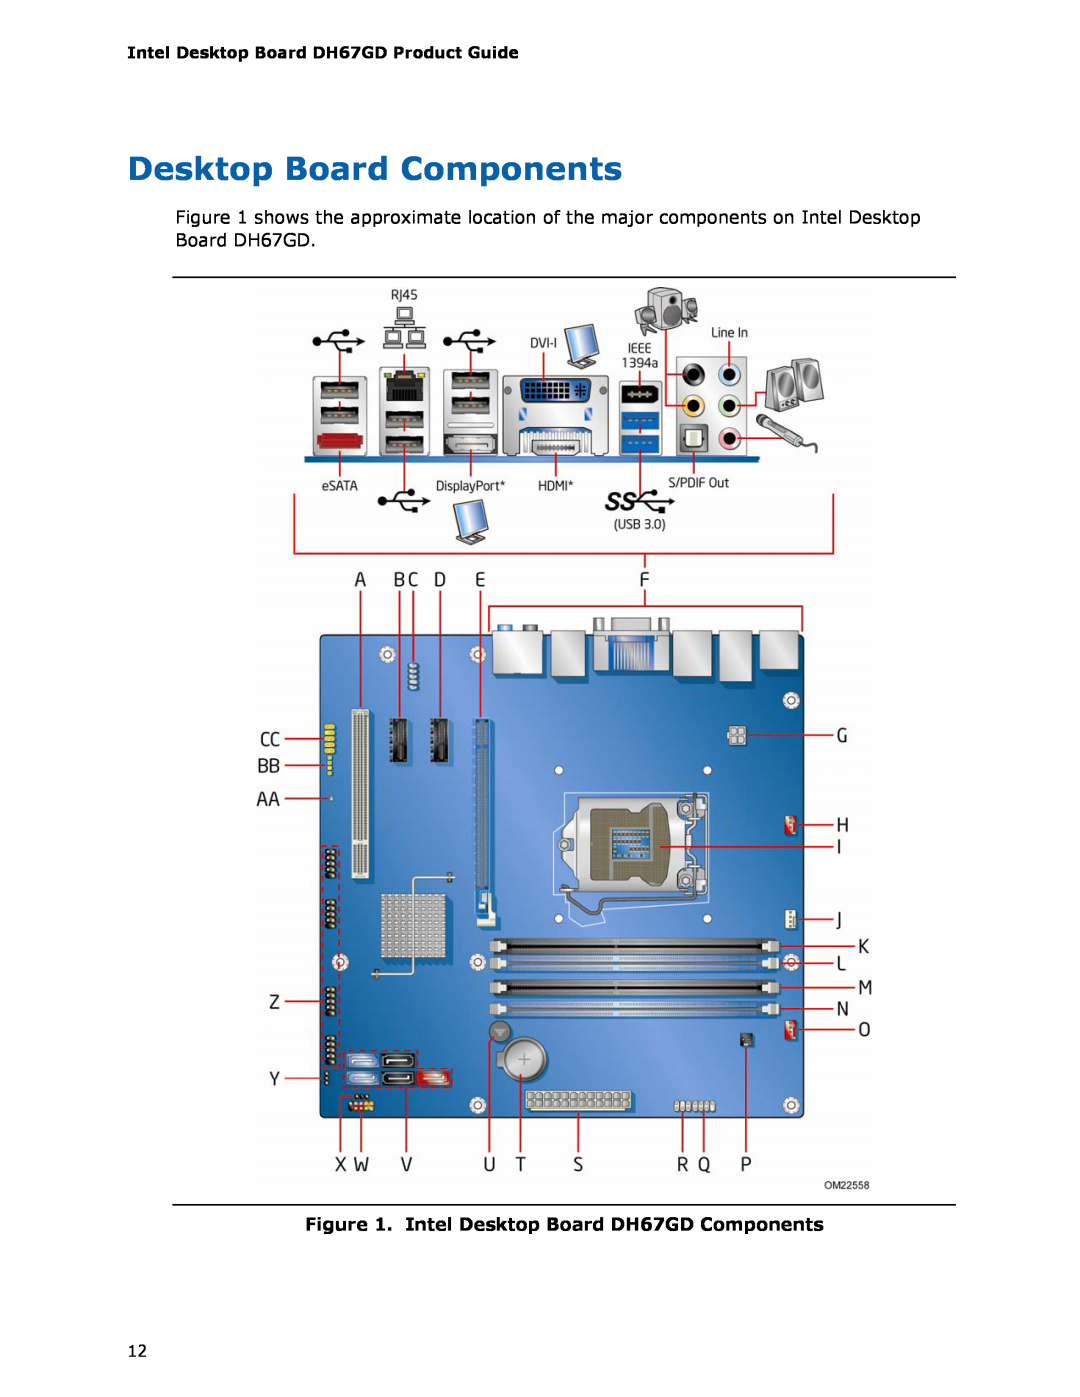 Intel BLKDH67GDB3, G13841-001 manual Desktop Board Components, Intel Desktop Board DH67GD Components 